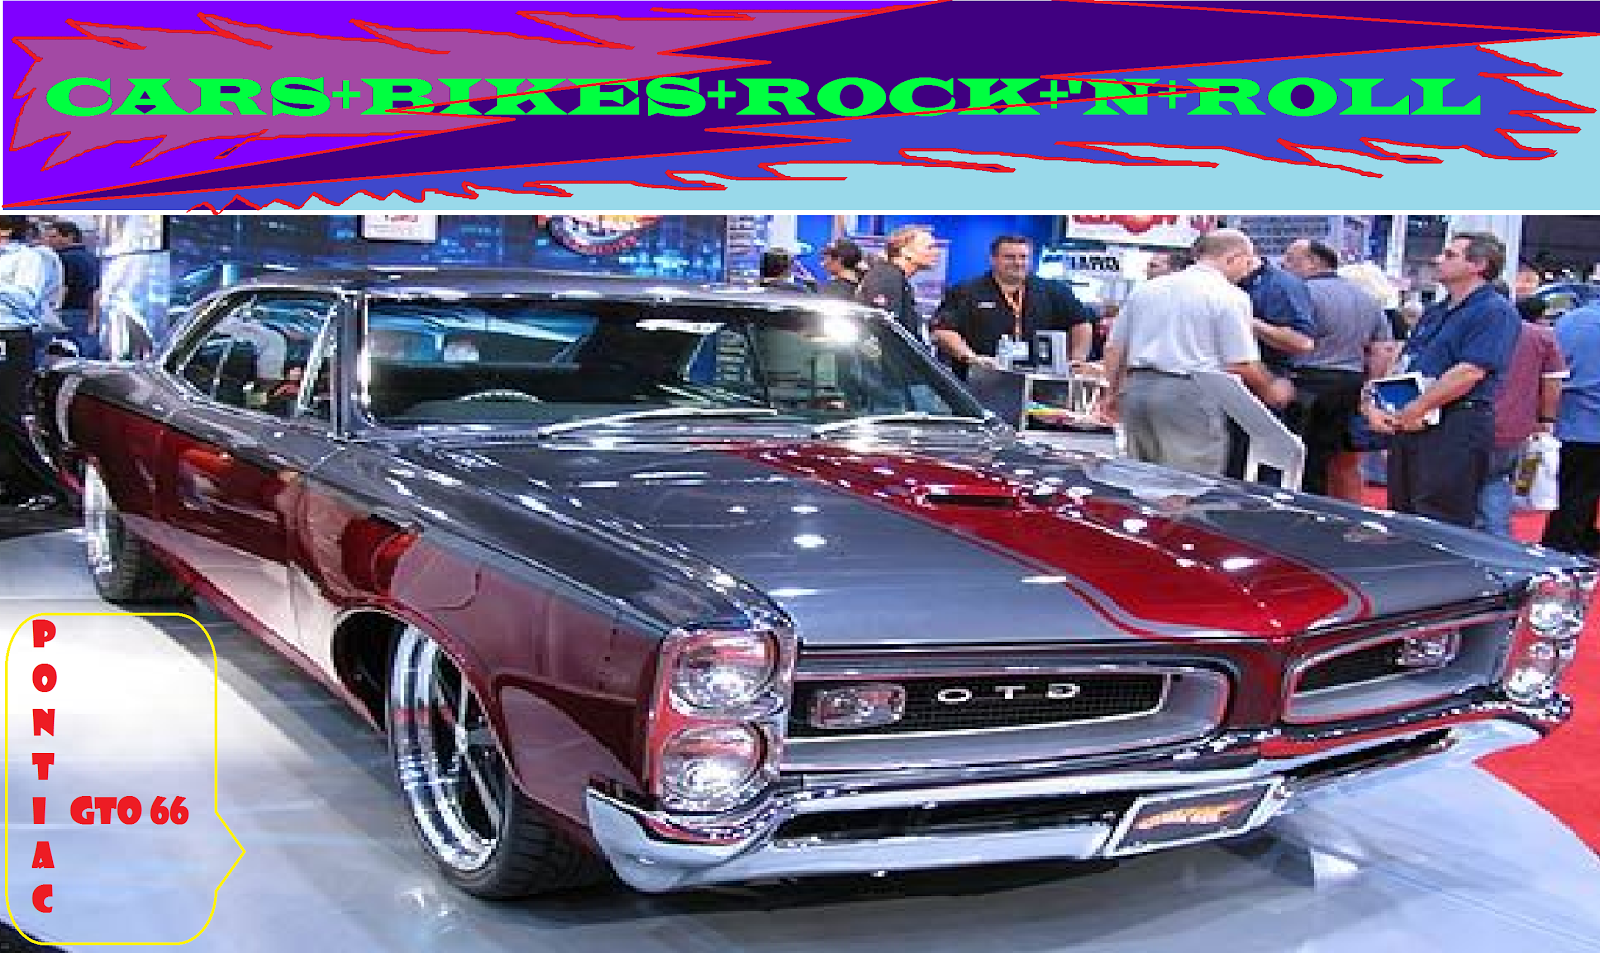 '66 PONTIAC BY CARS+BIKES+ROCK+'N+ROLL